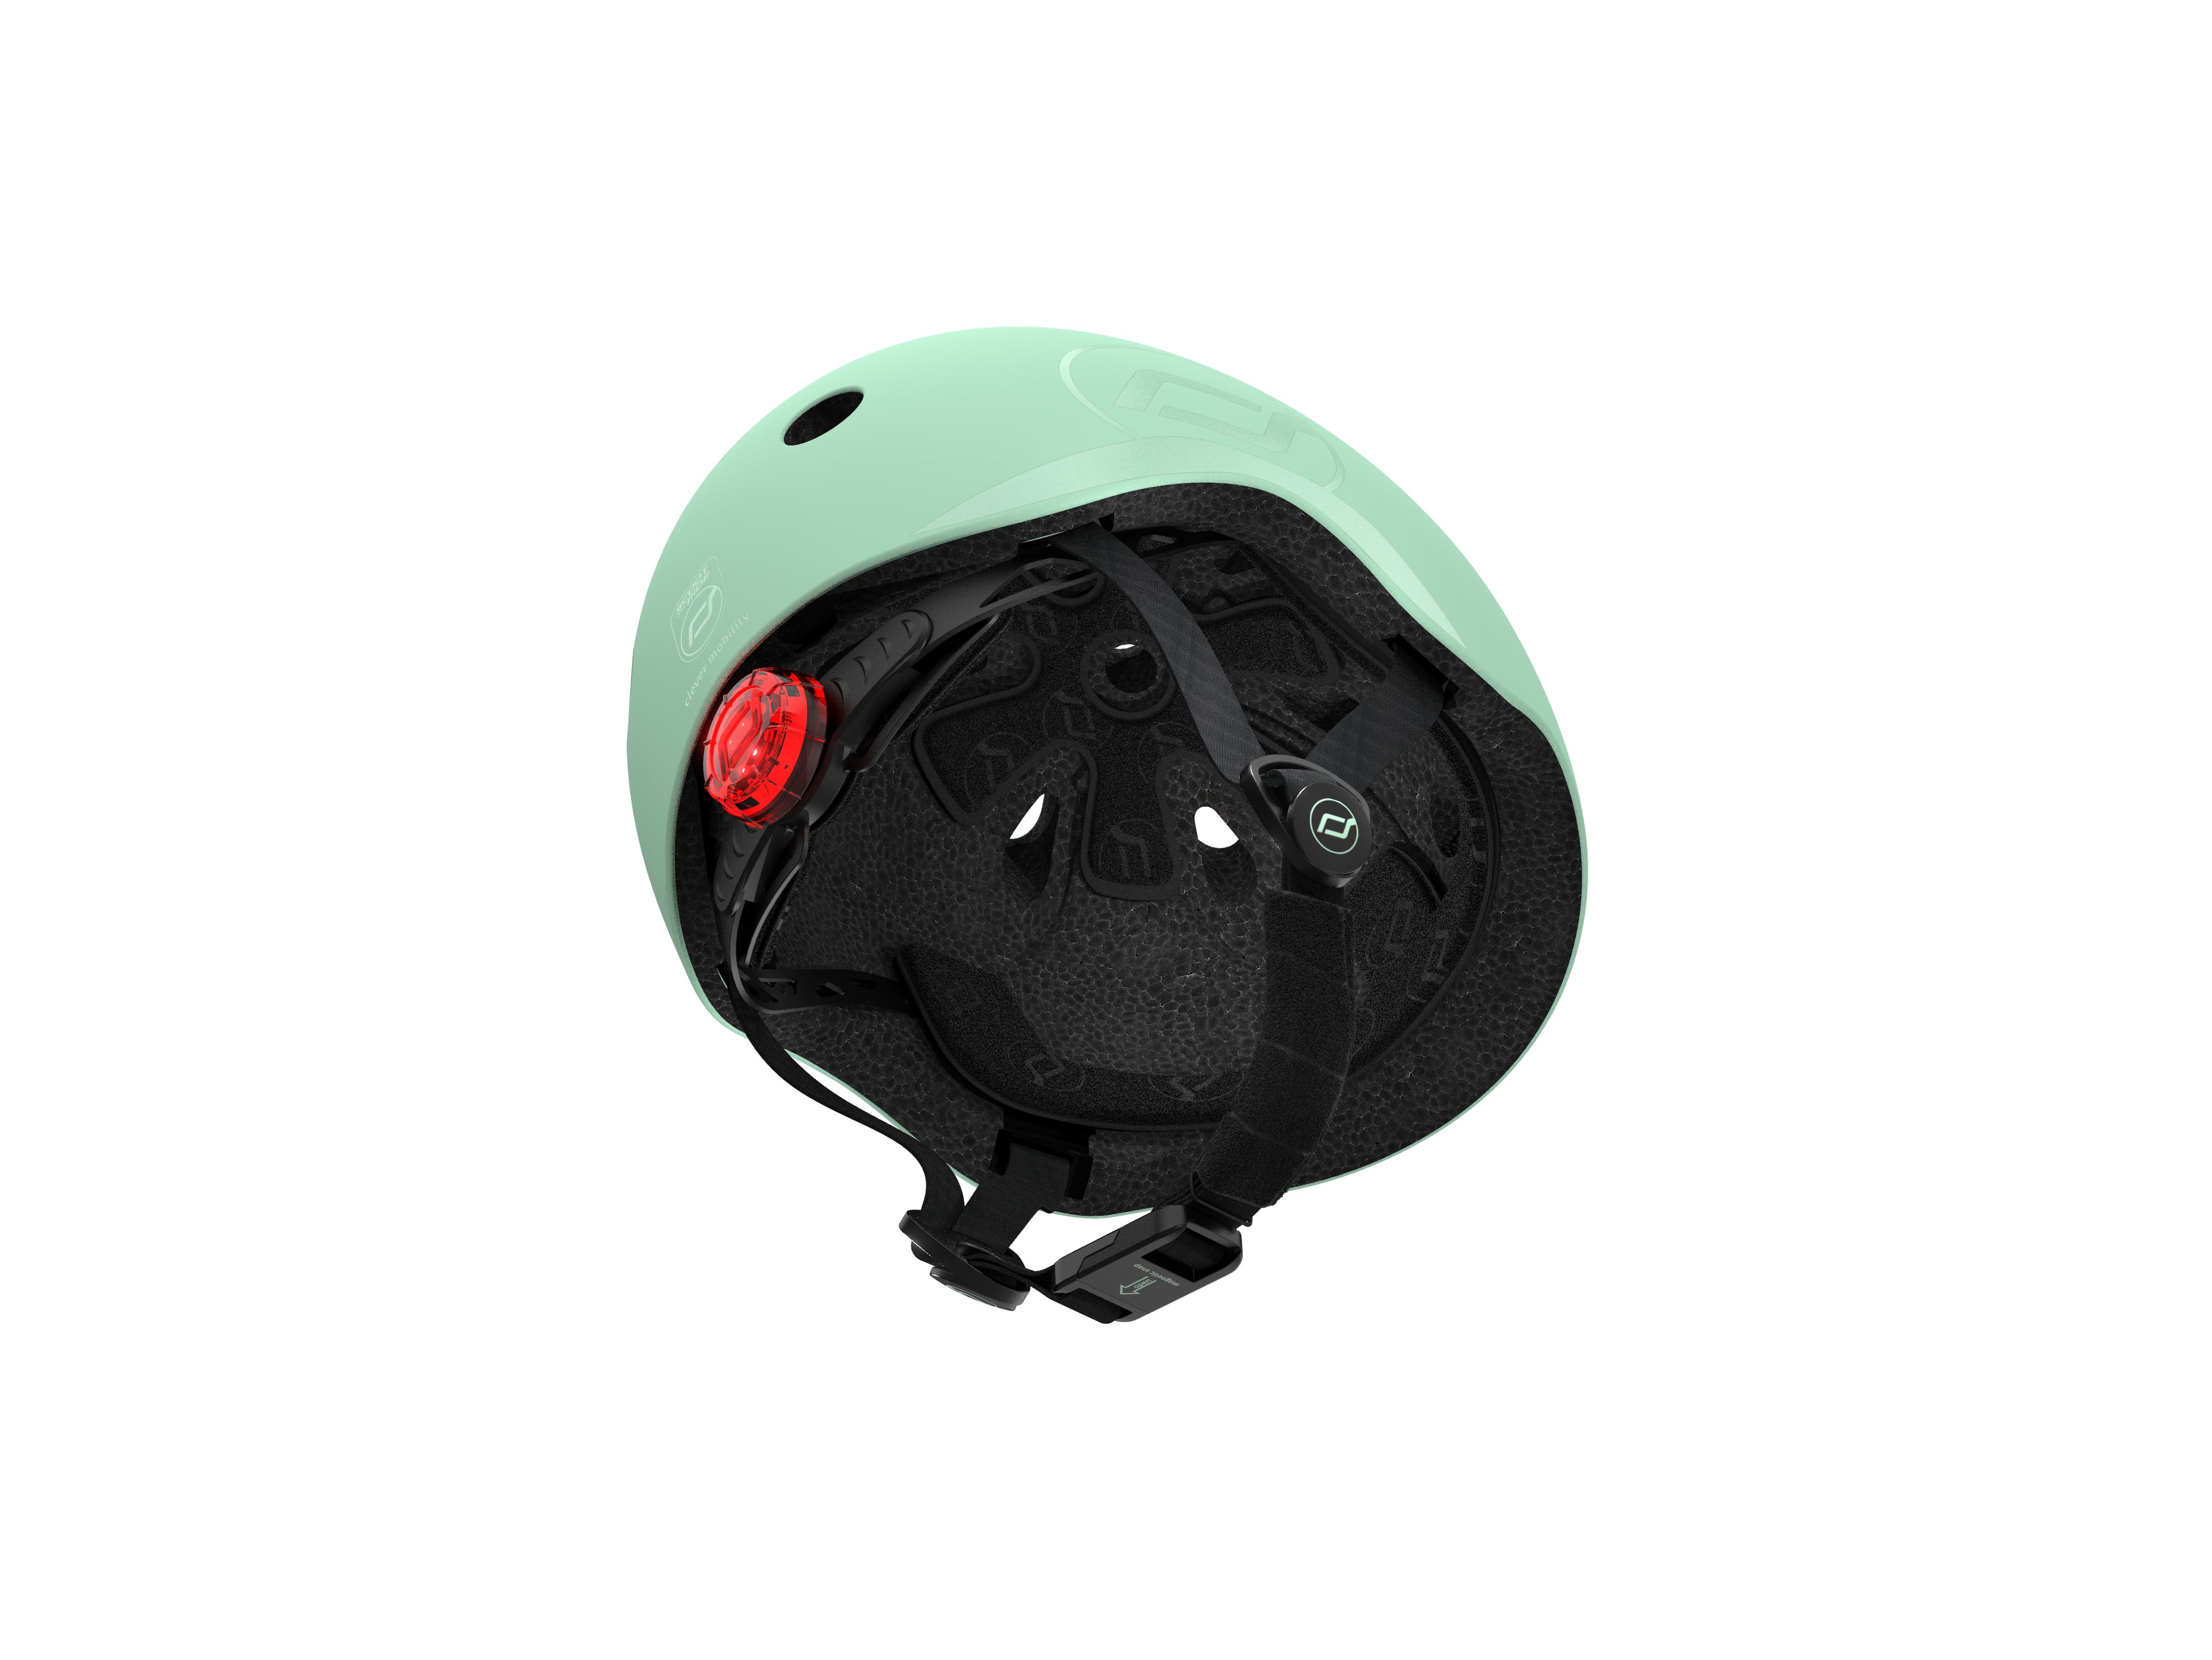 Scoot And Ride Helmet – Kiwi